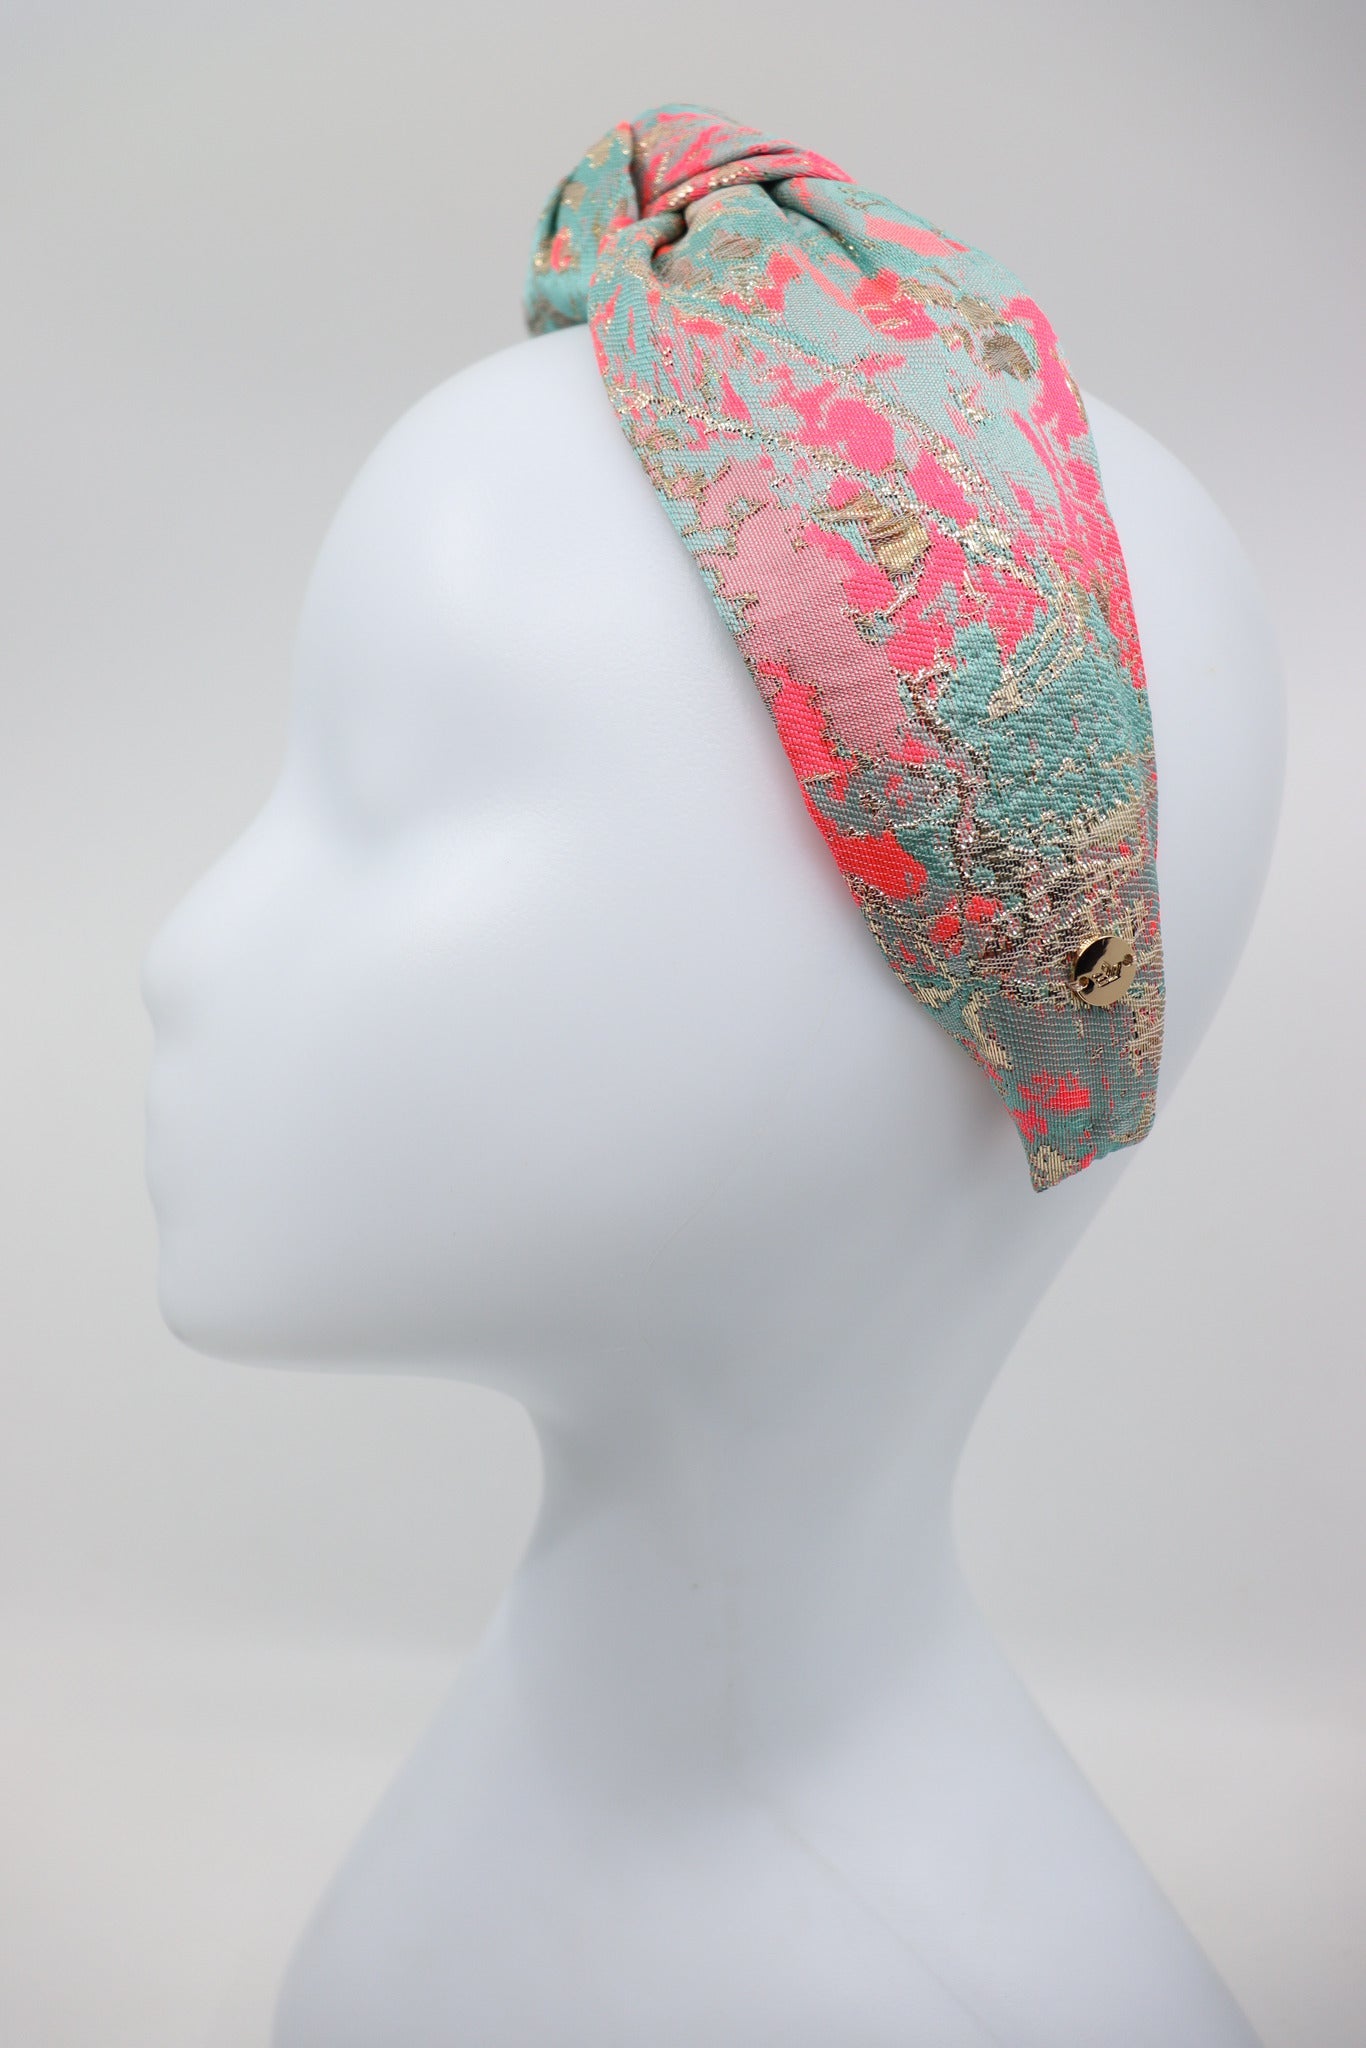 Misty Knot Headband Available Now